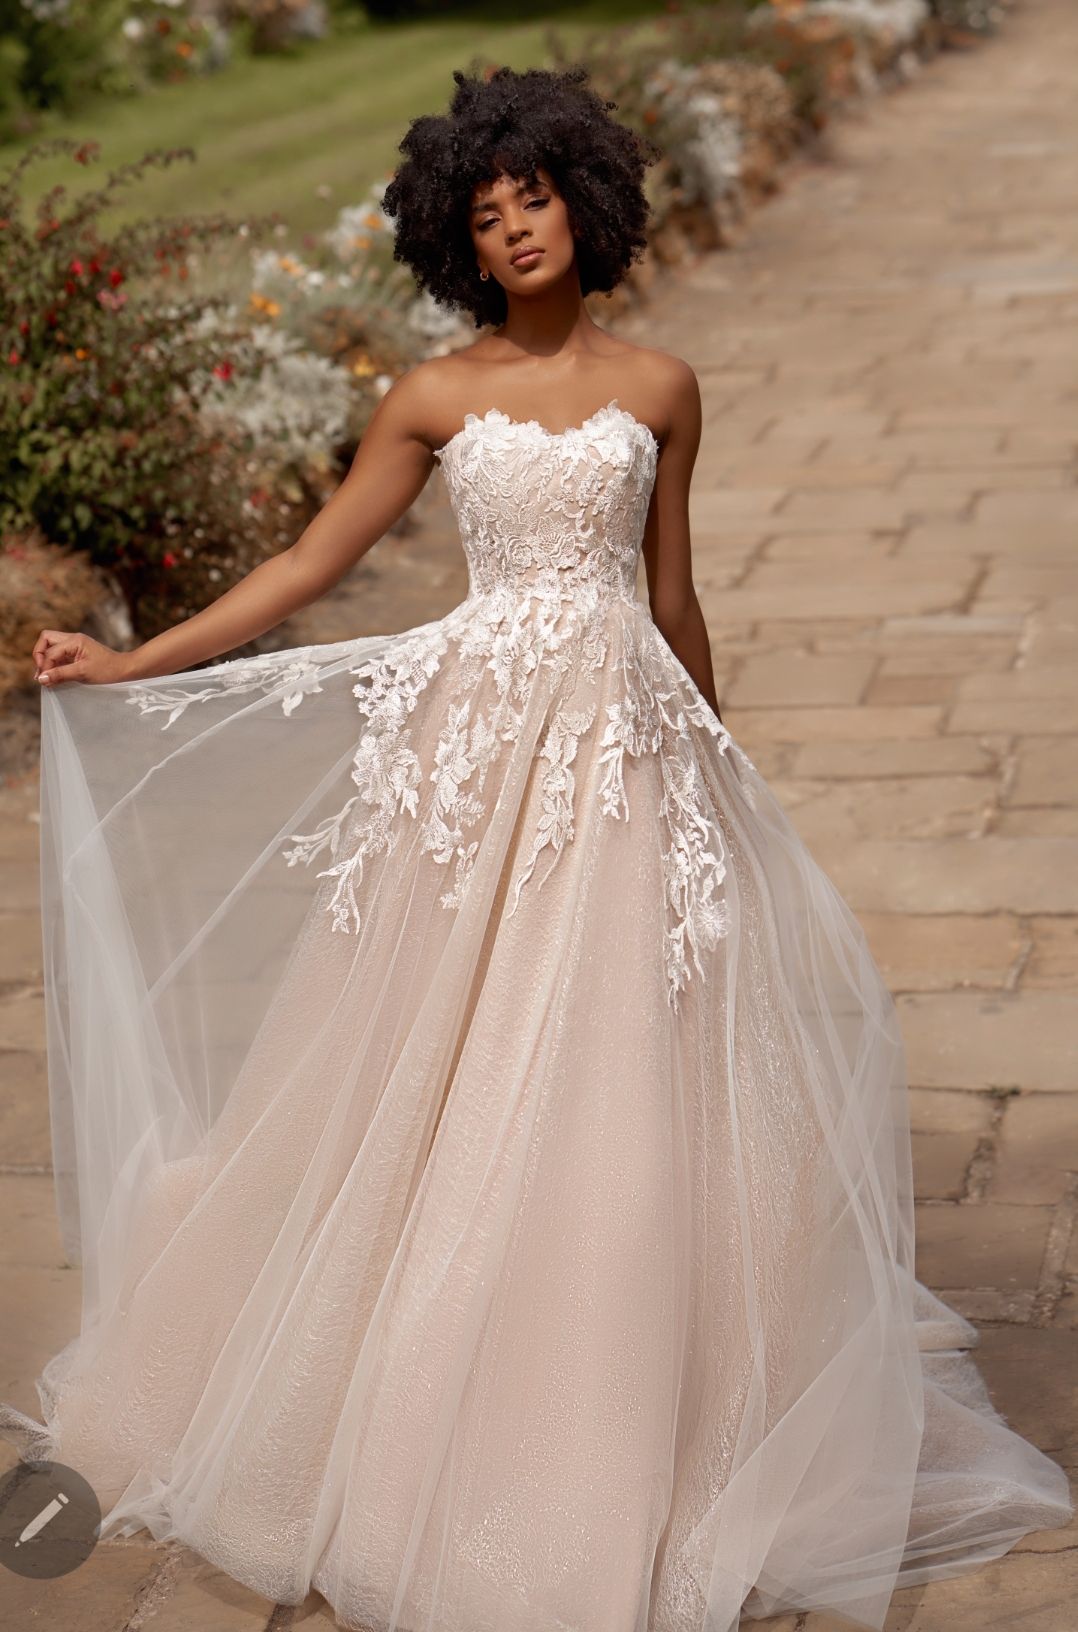 Best Dress 2 Impress Bridal-Image-24